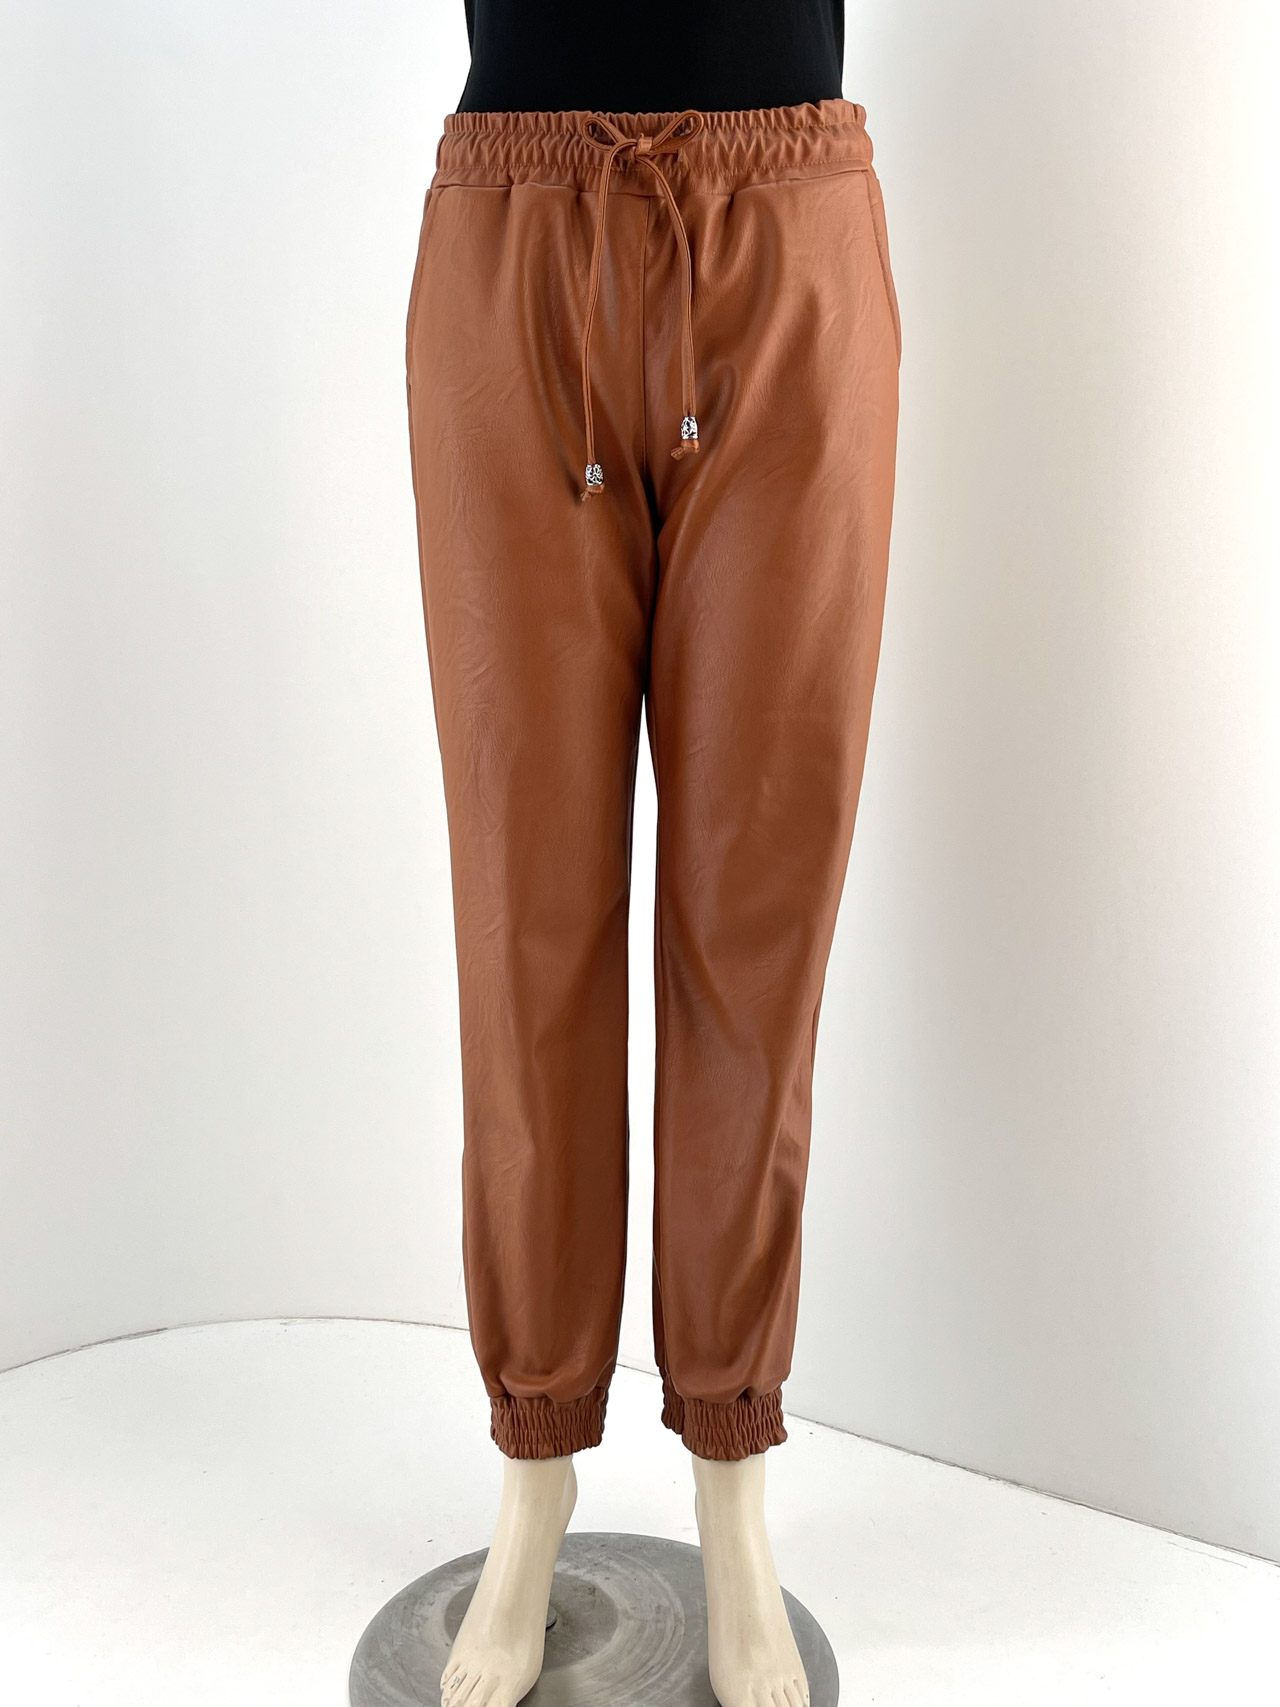 Leatherette pants female code 9283